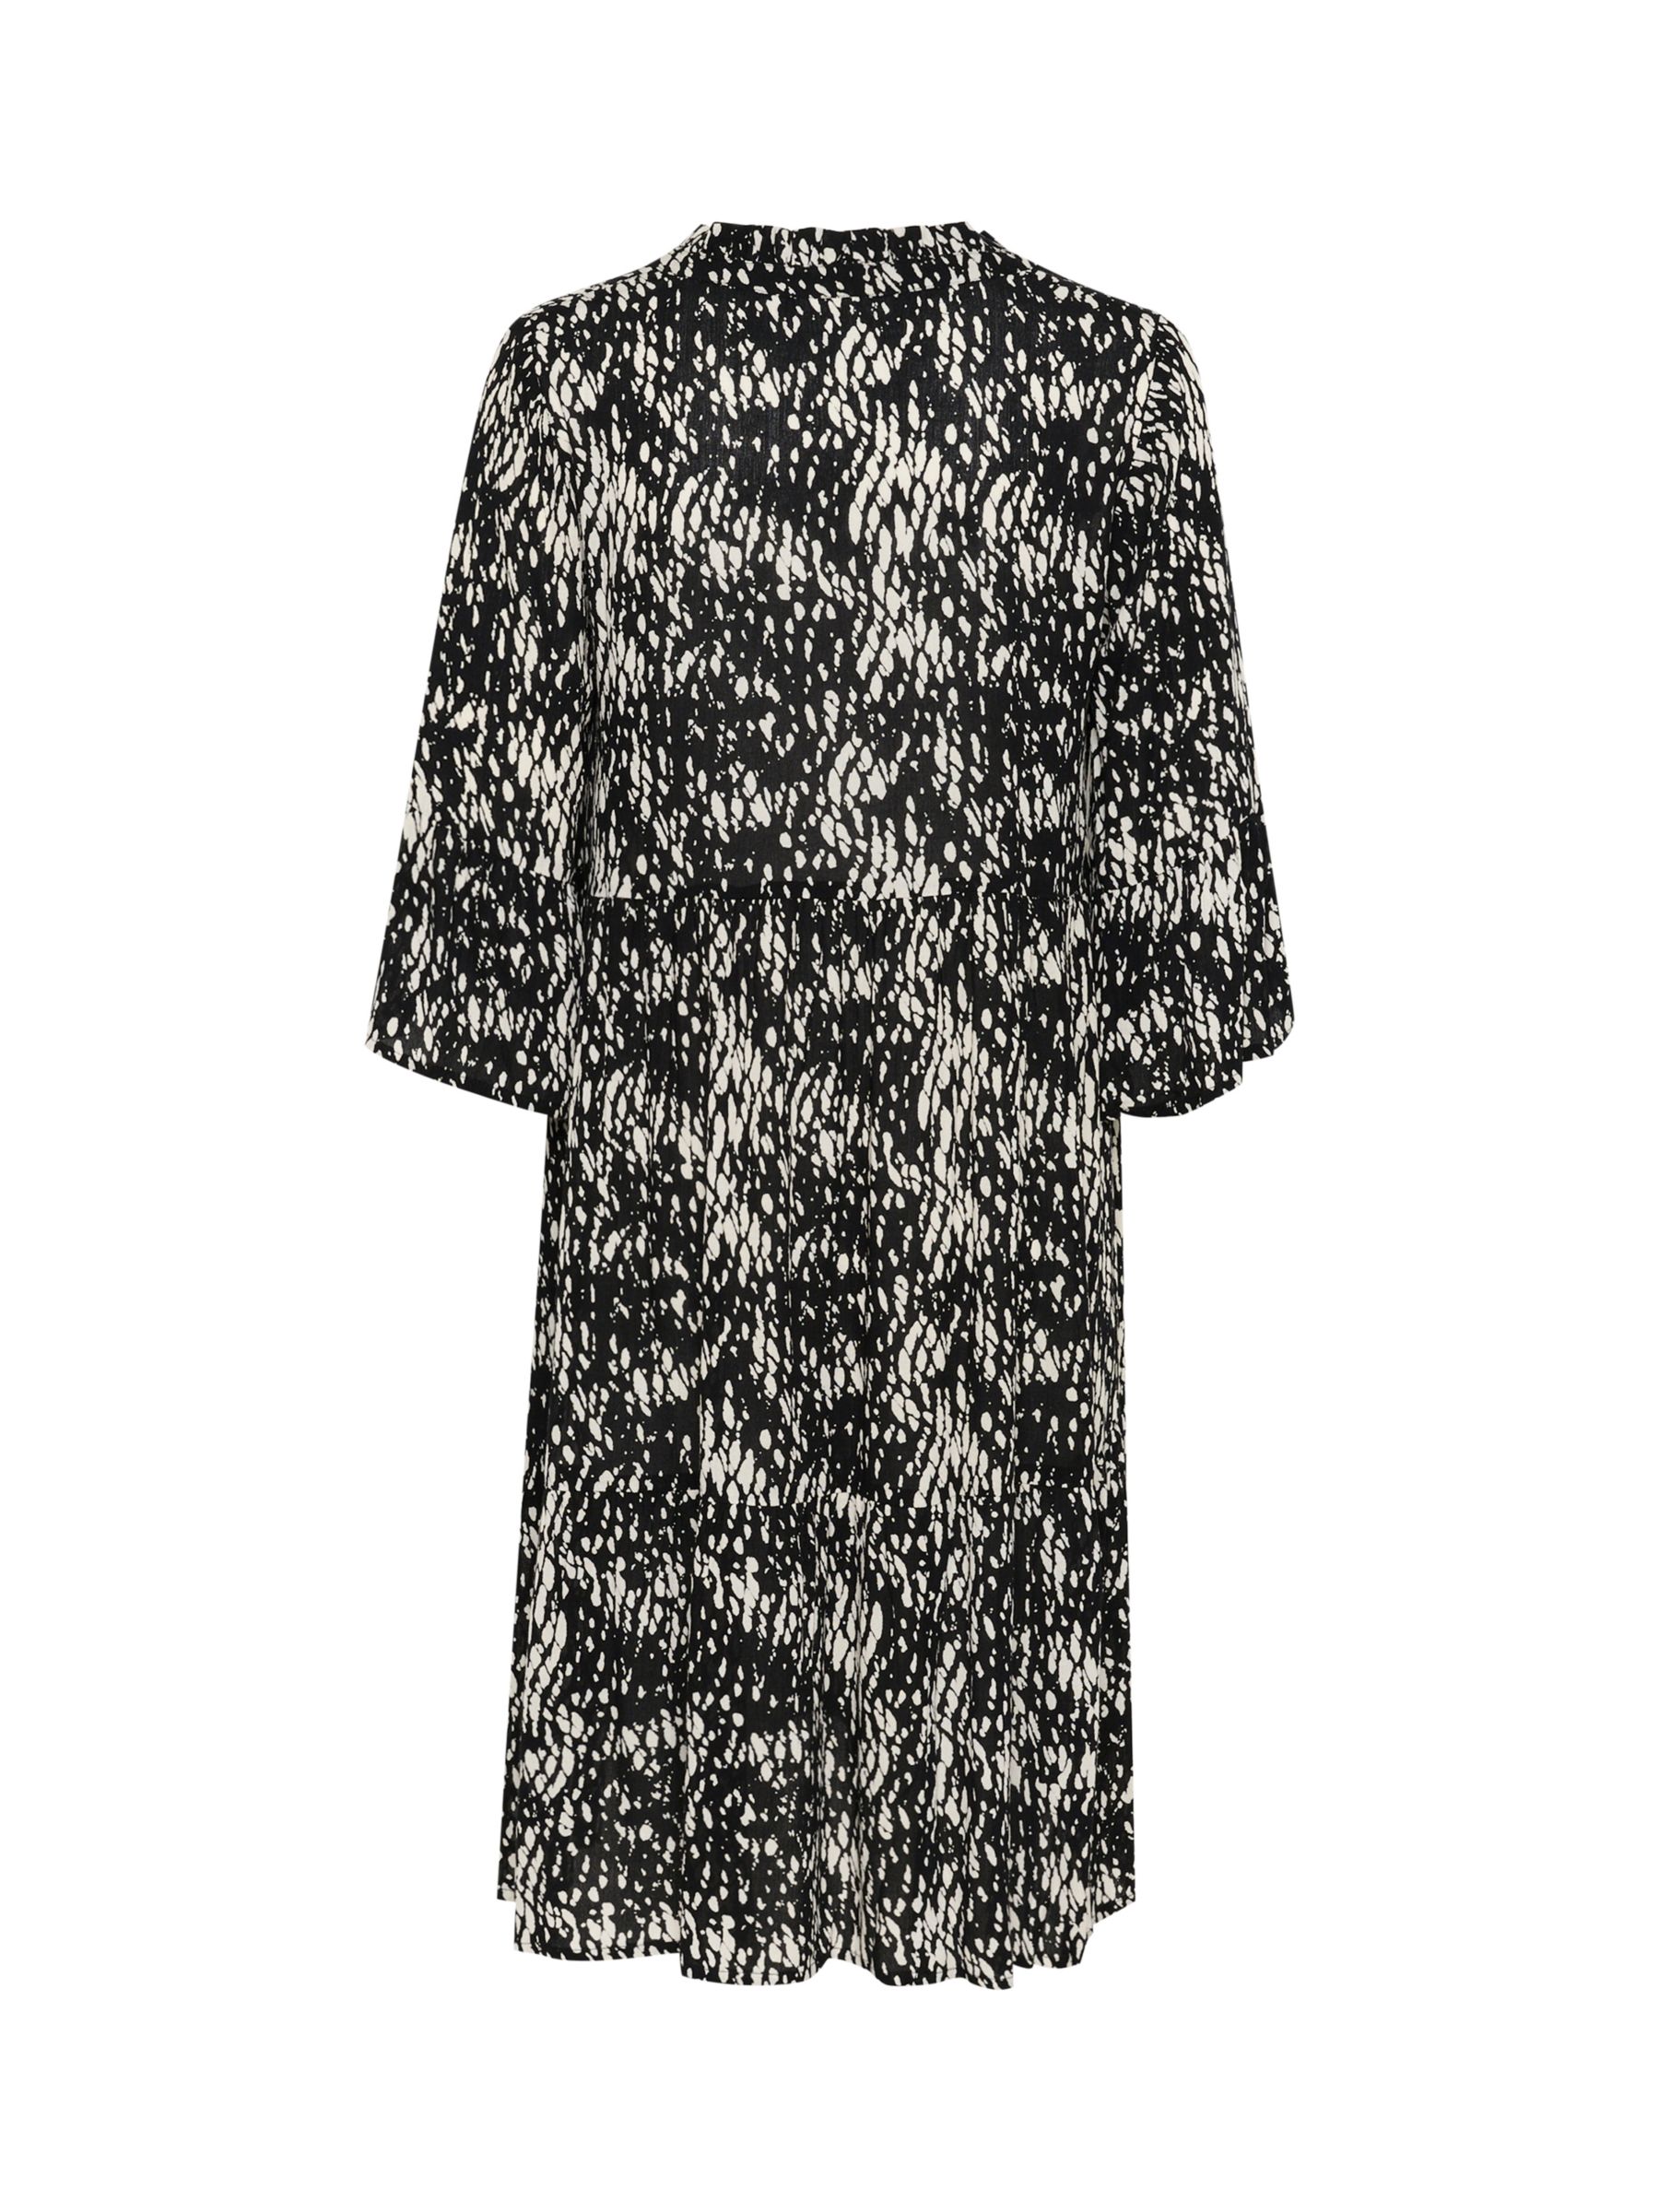 KAFFE Hera Amber Abstract Graphic Print Dress, Black/White, 8